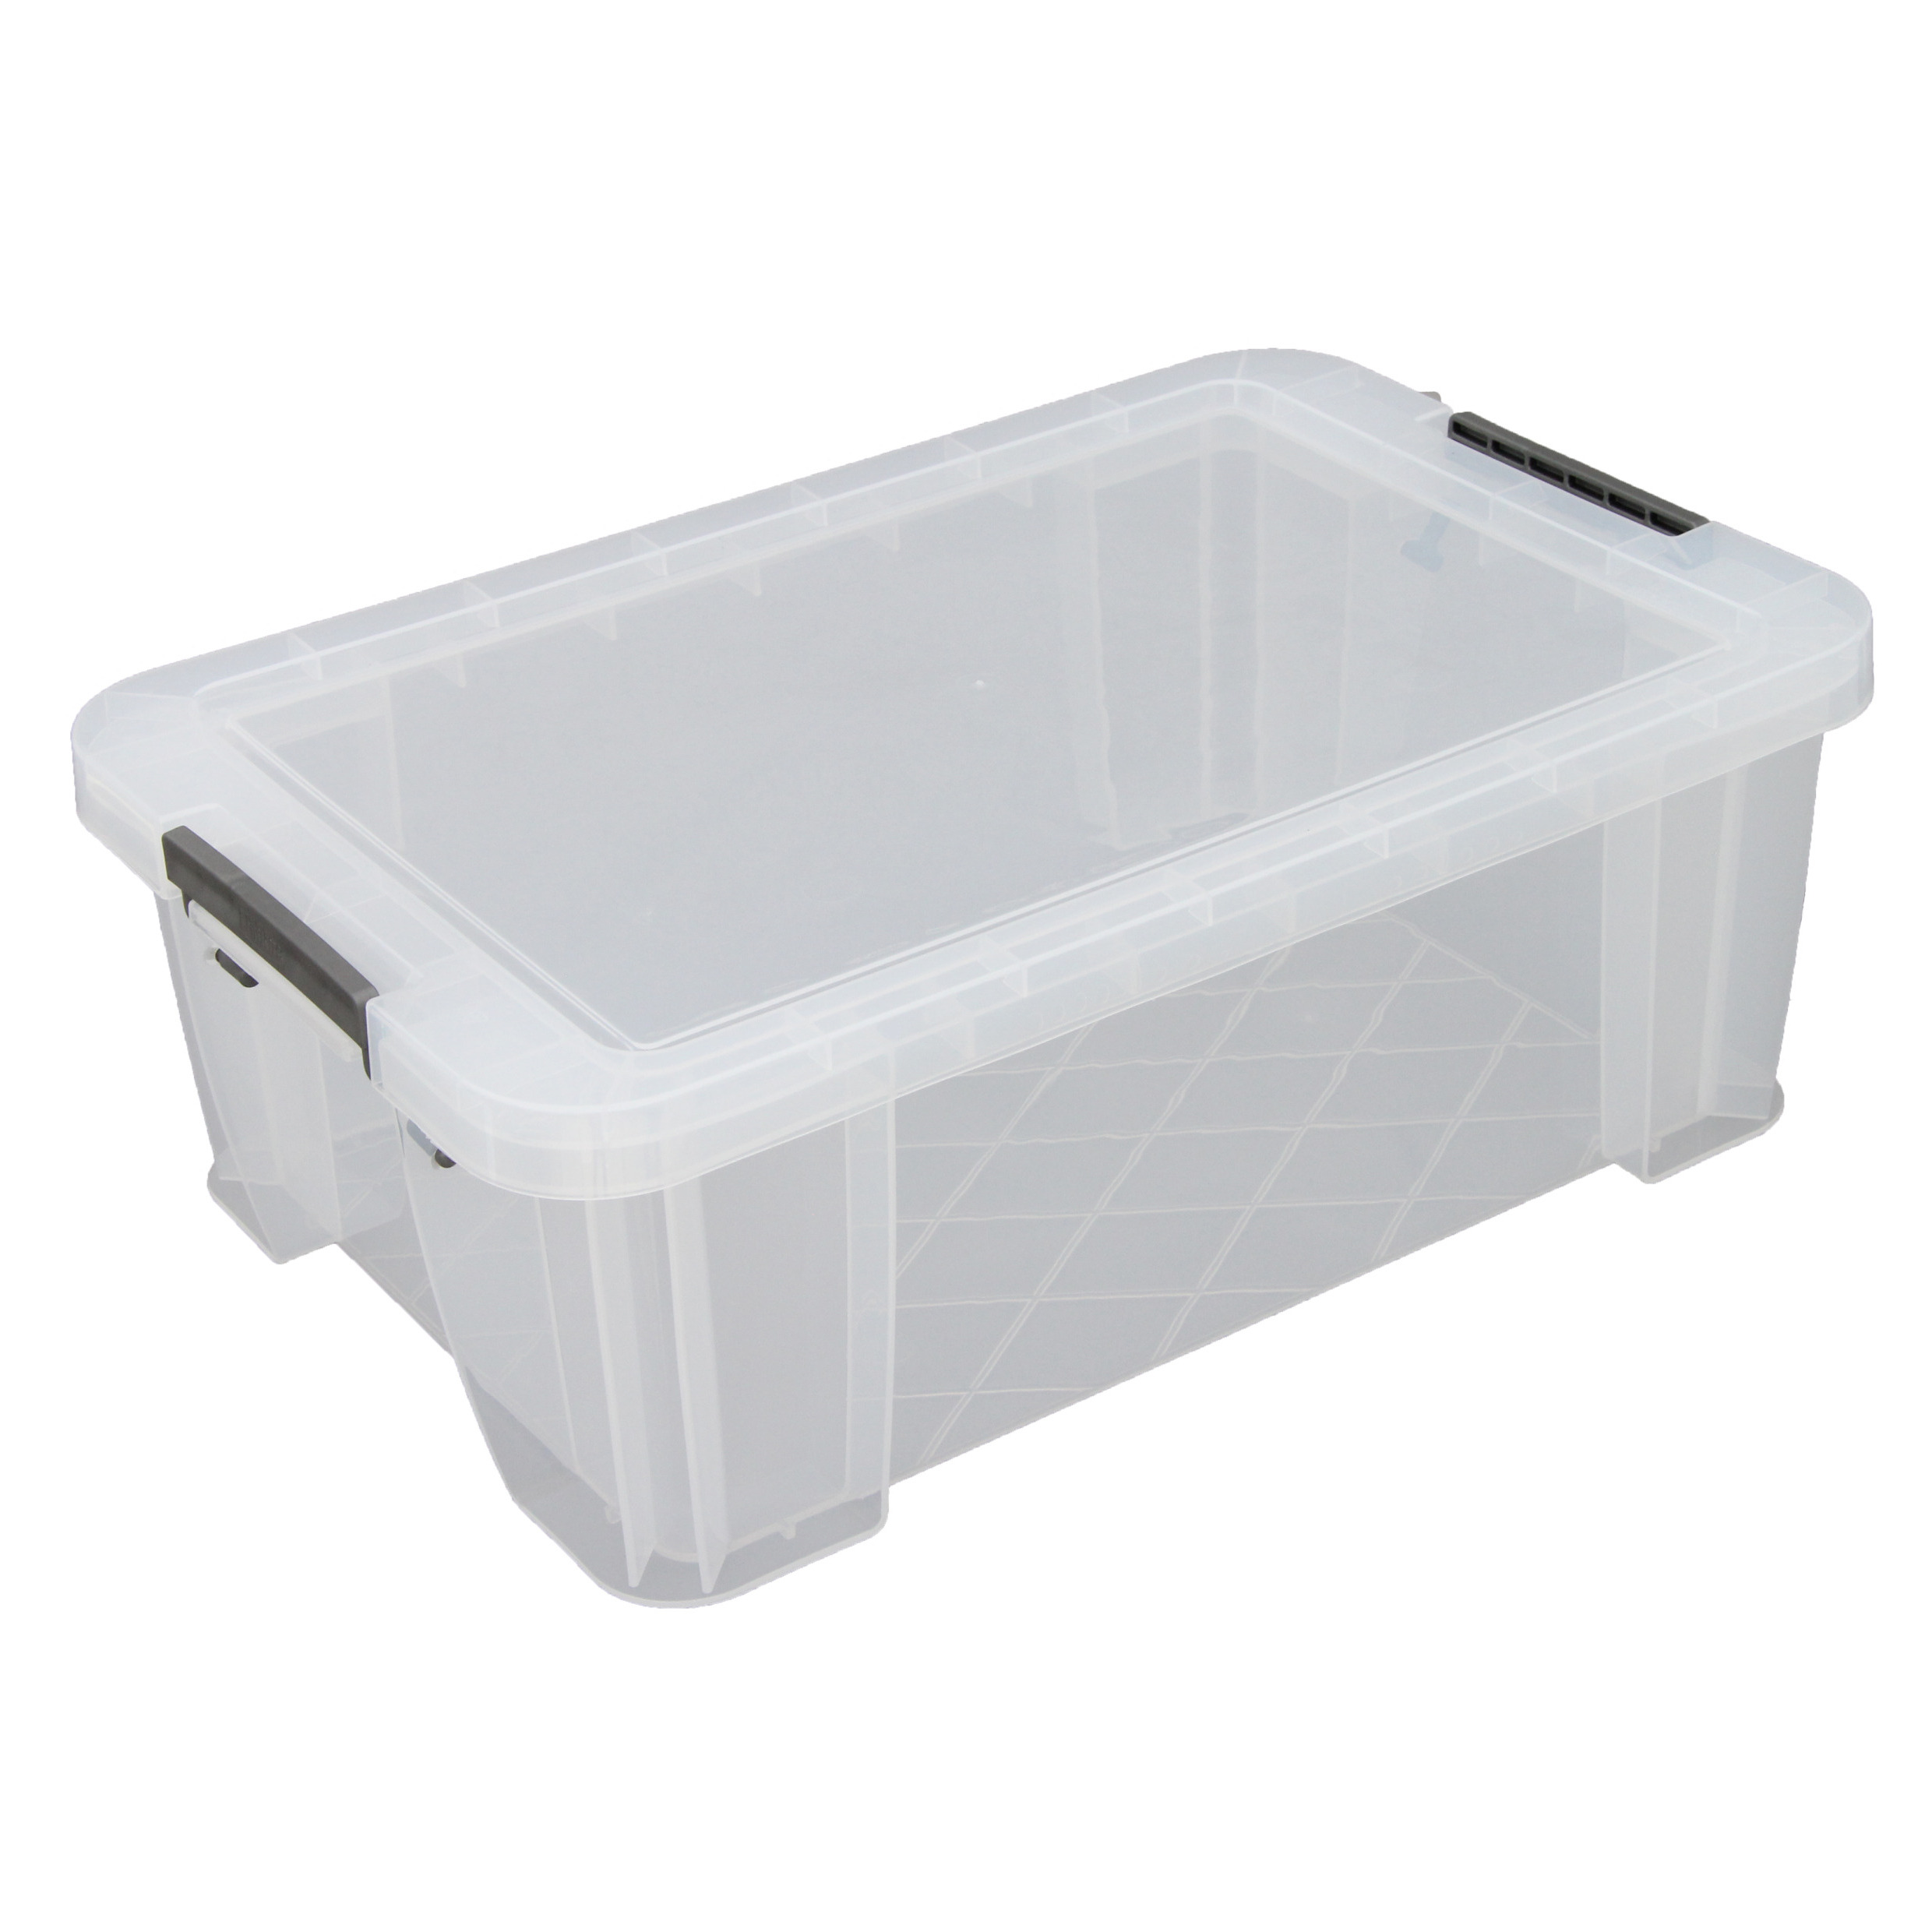 Allstore Opbergbox 15 liter transparant kunststof 47 x 30 x 17 cm